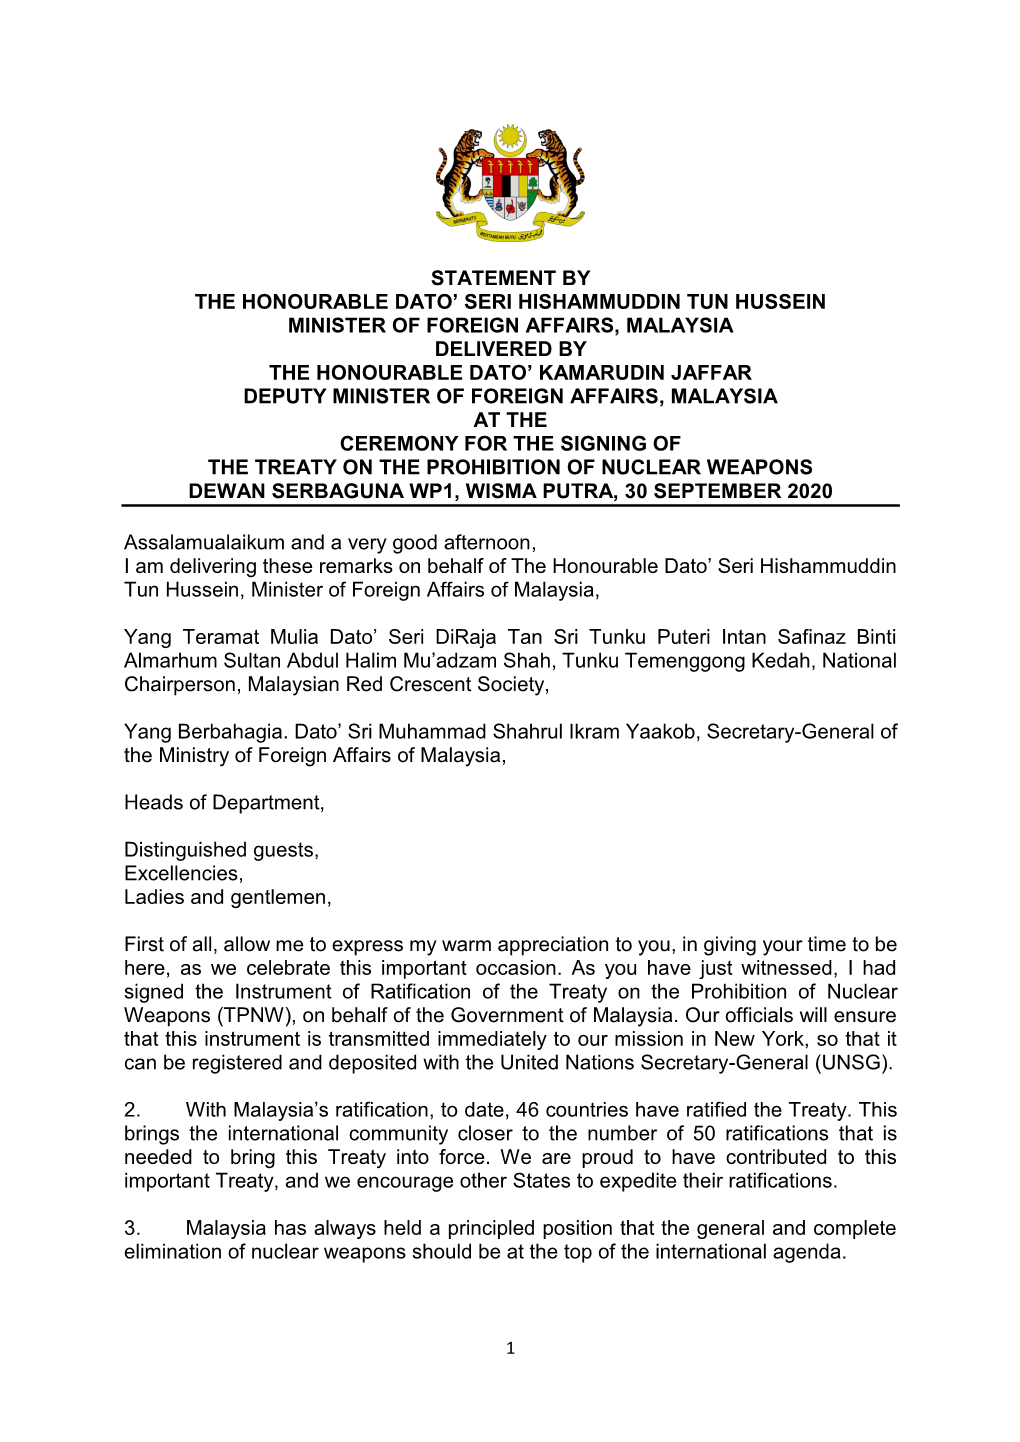 Statement by the Honourable Dato' Seri Hishammuddin Tun